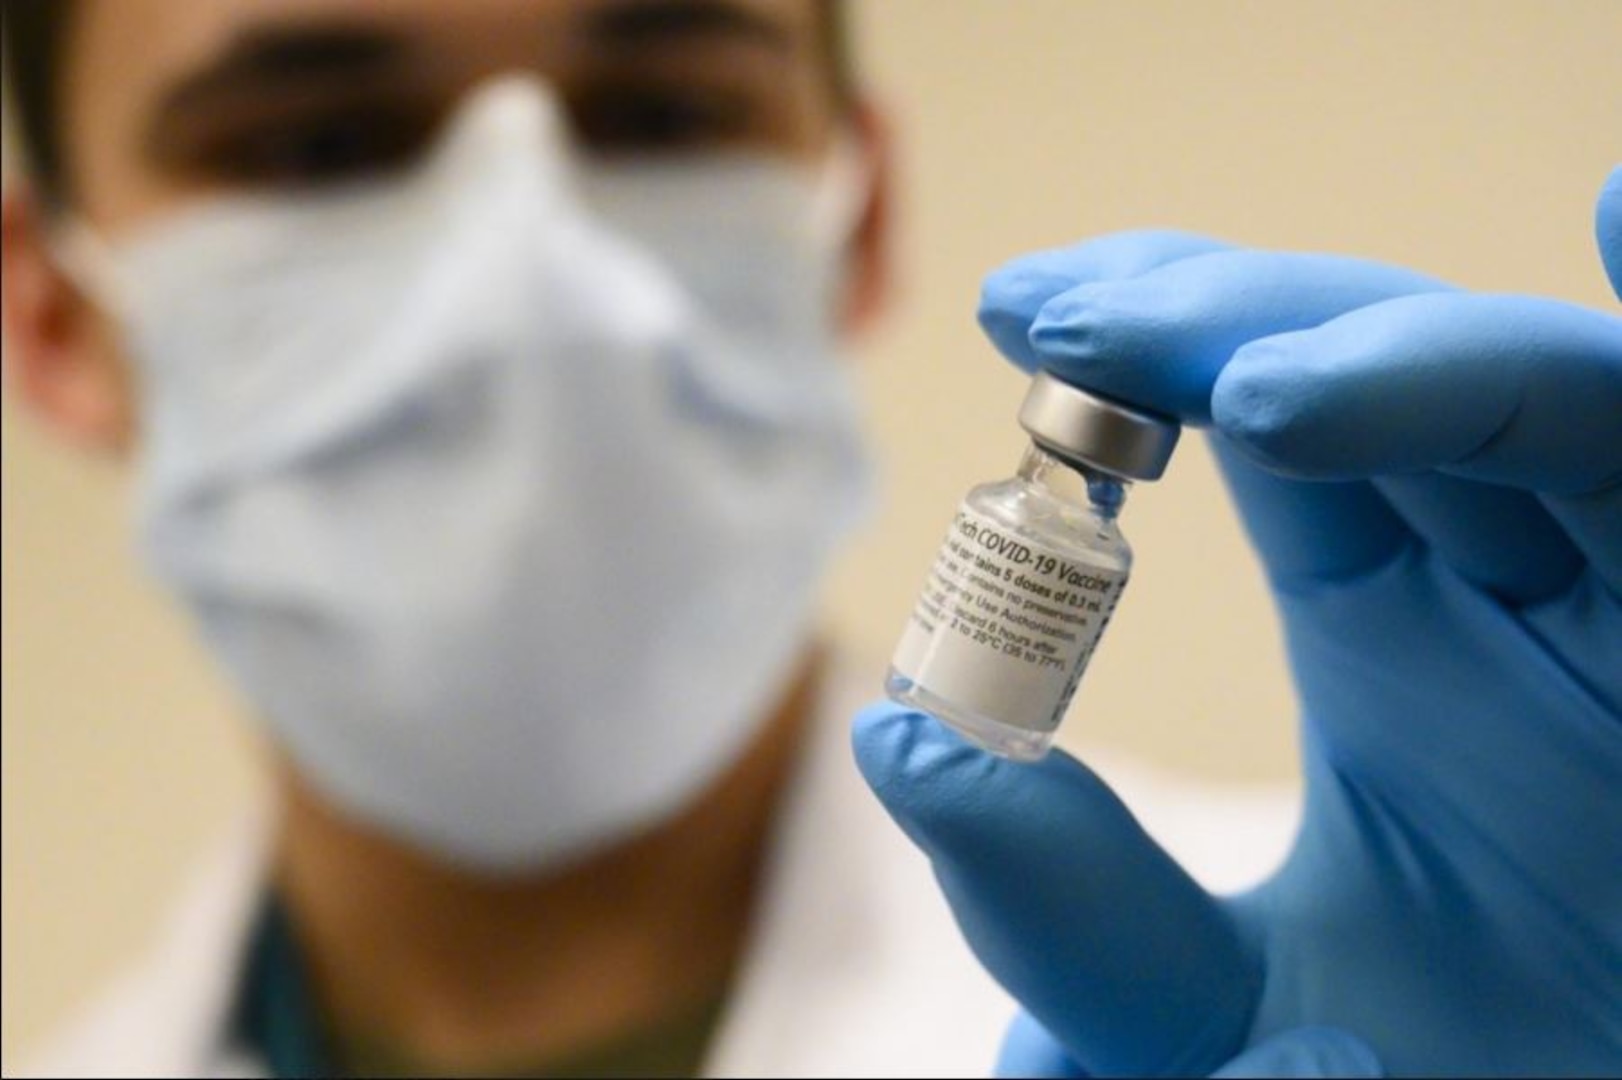 Army Spc. Angel Laureano holds a vial of the COVID-19 vaccine, Walter Reed National Military Medical Center, Bethesda, Md., Dec. 14, 2020. (DoD photo by Lisa Ferdinando) (Lisa Ferdinando)